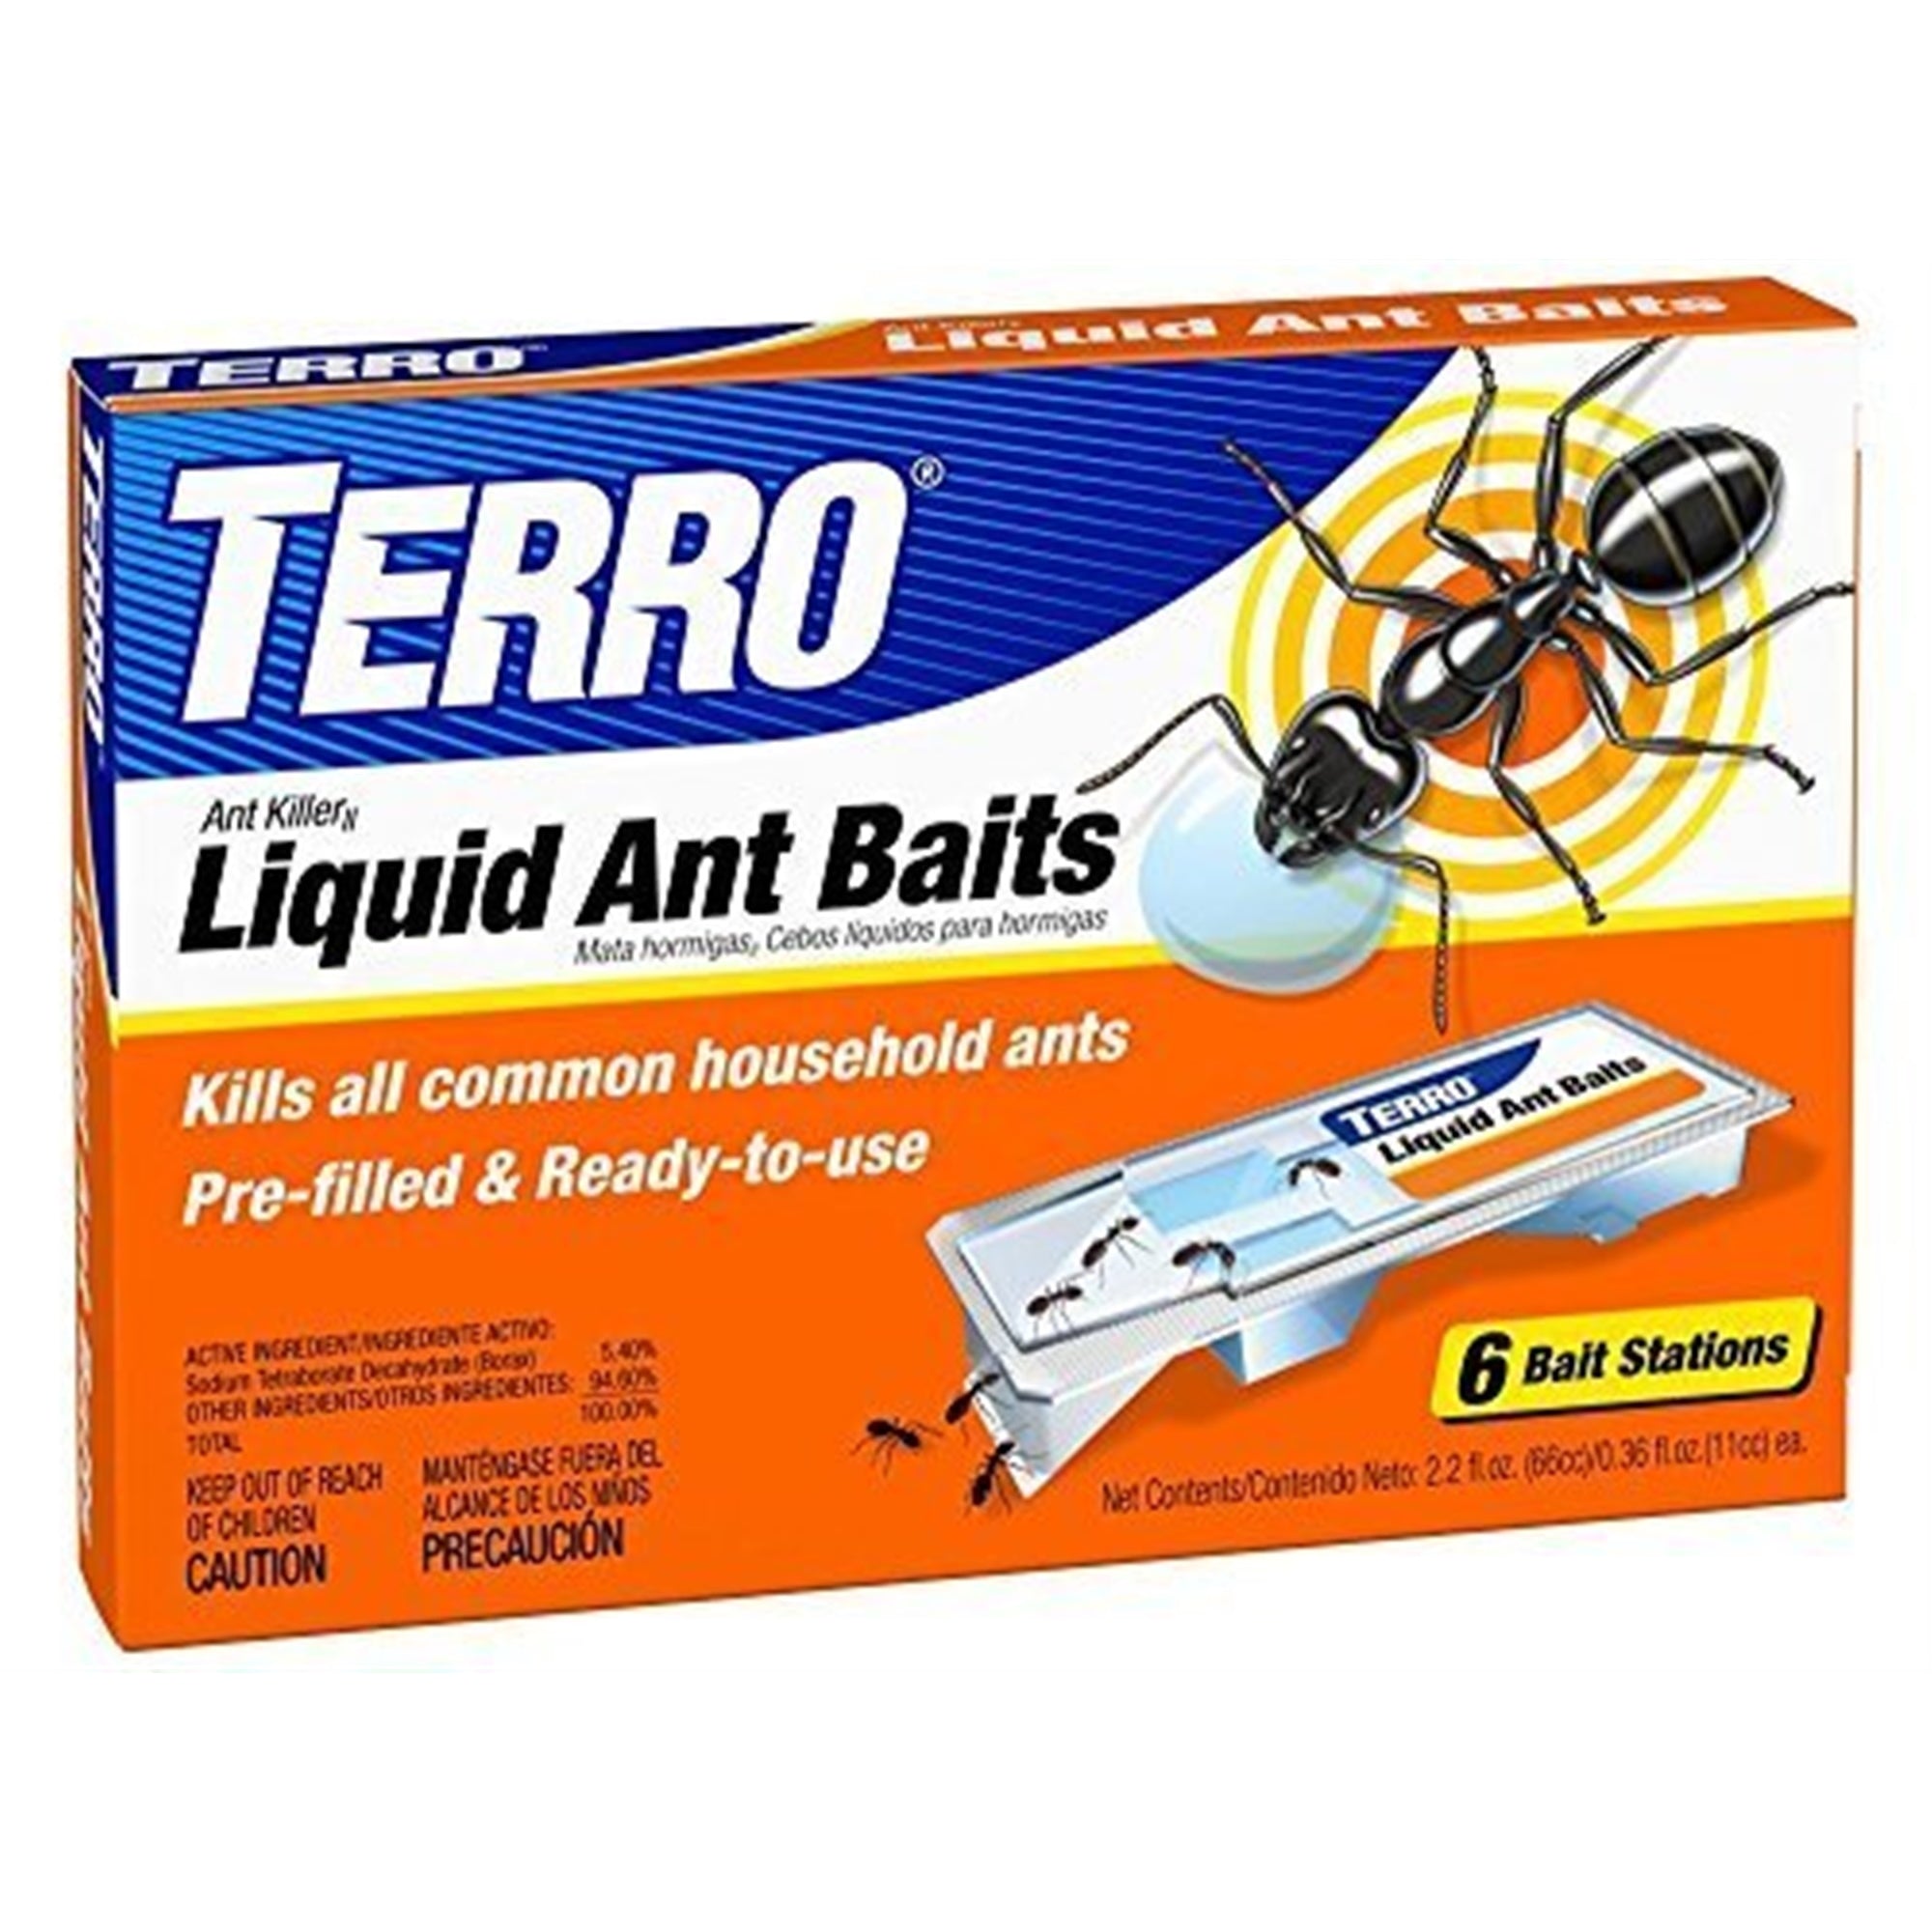 Terro Liquid Ant Bait, Pre-filled, RTU, Single box has 6 bait stations